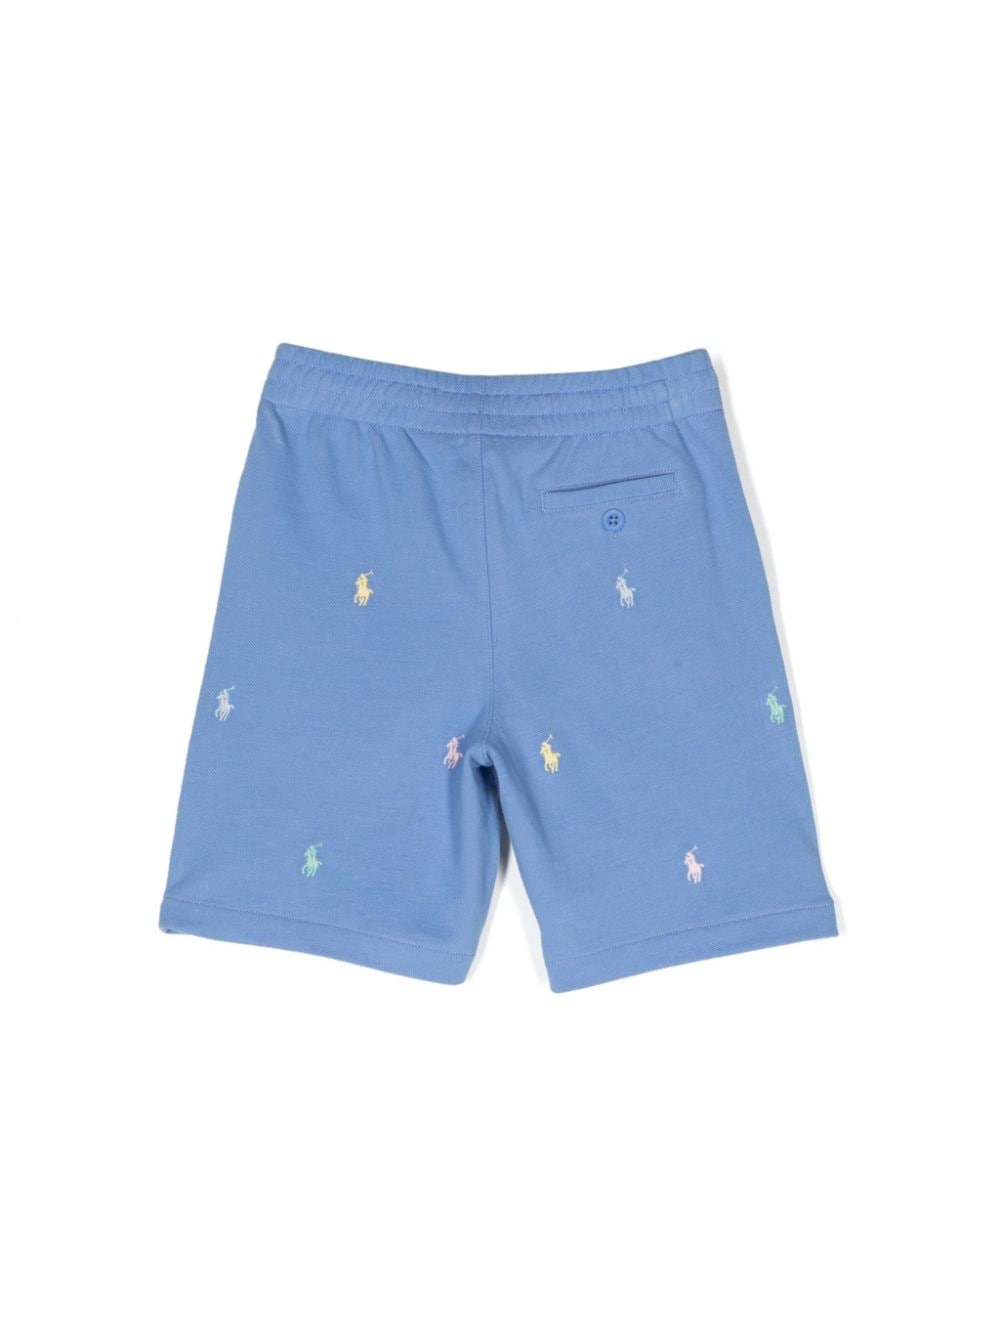 Light blue Bermuda shorts for boys with logo